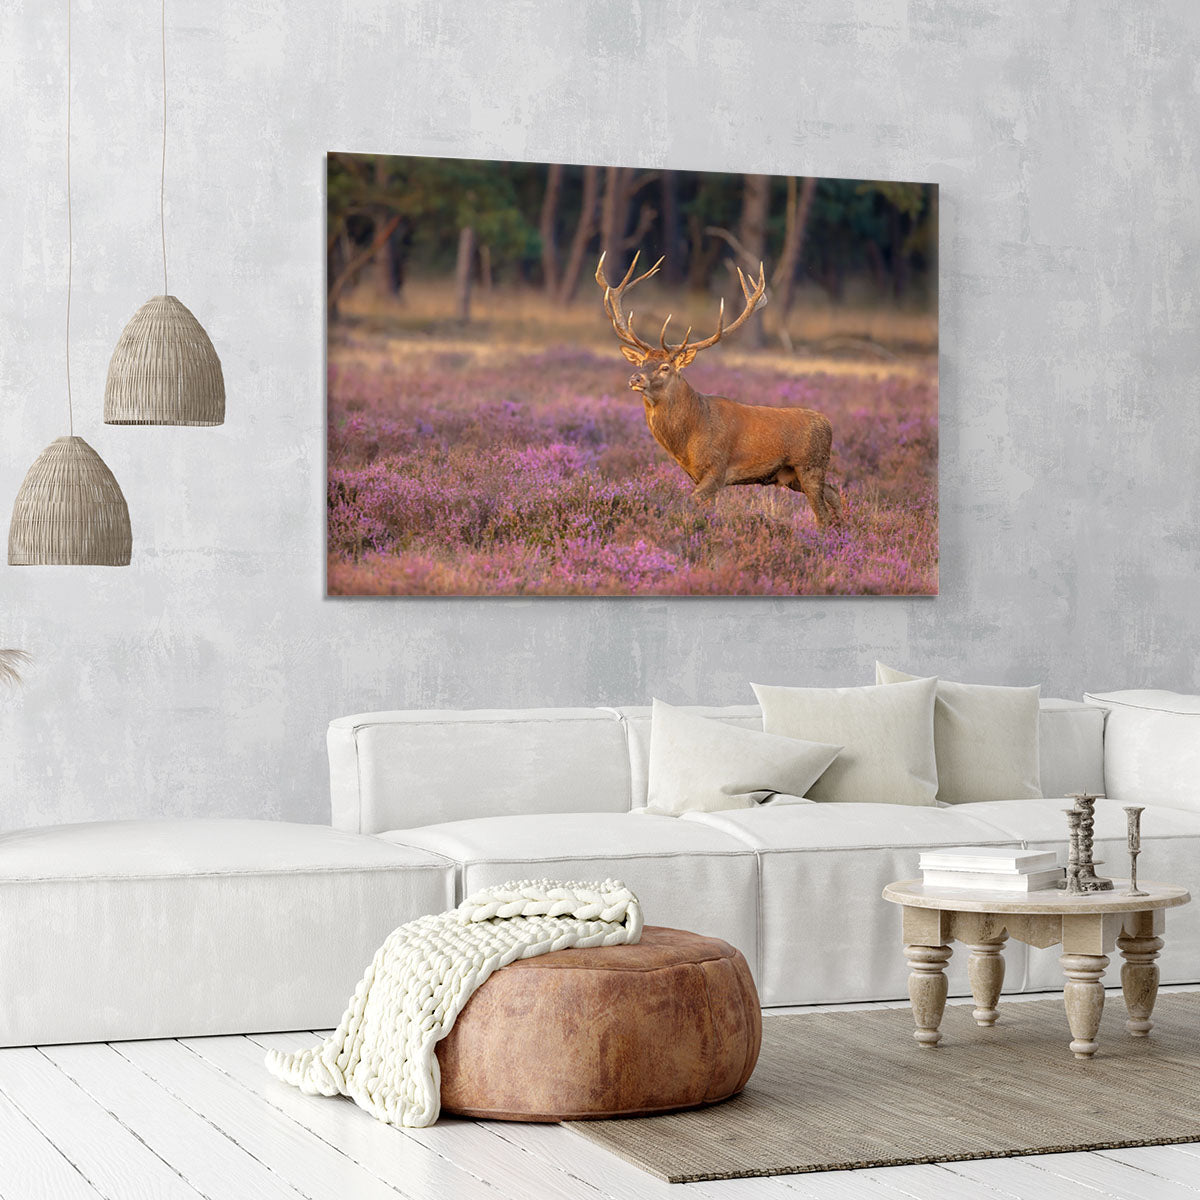 Male red deer Cervus elaphus with antlers during mating season Canvas Print or Poster - Canvas Art Rocks - 6